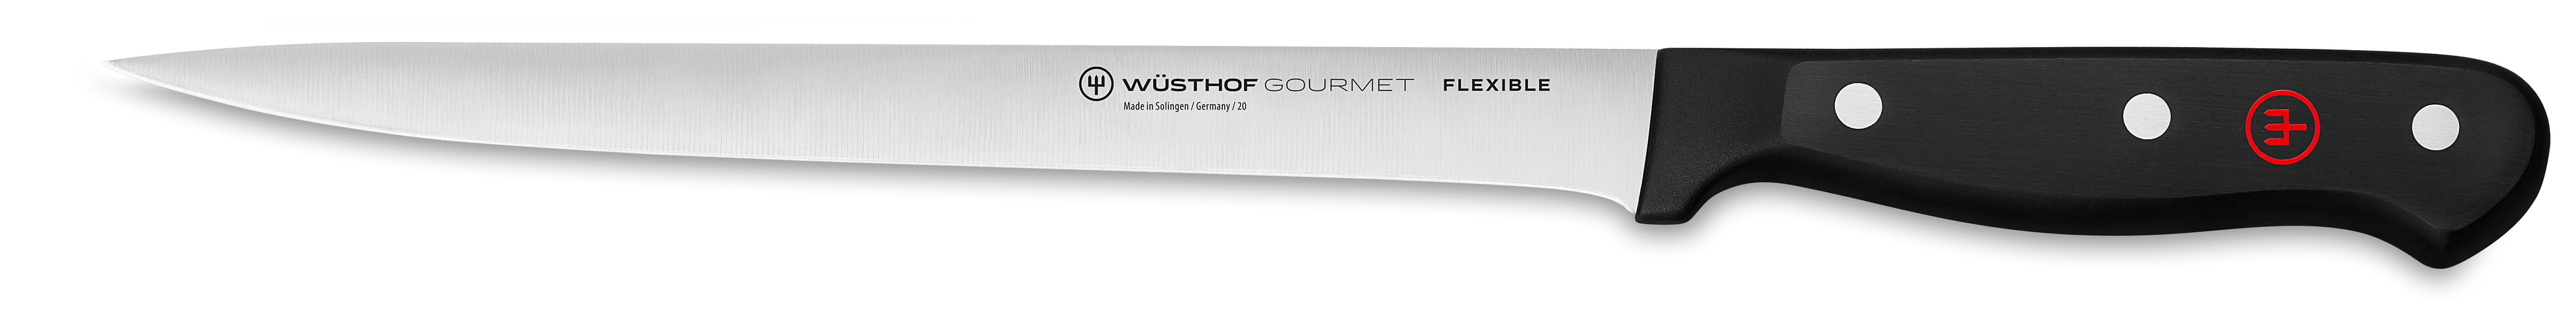 Wusthof Gourmet Fish Fillet Knife Flexible